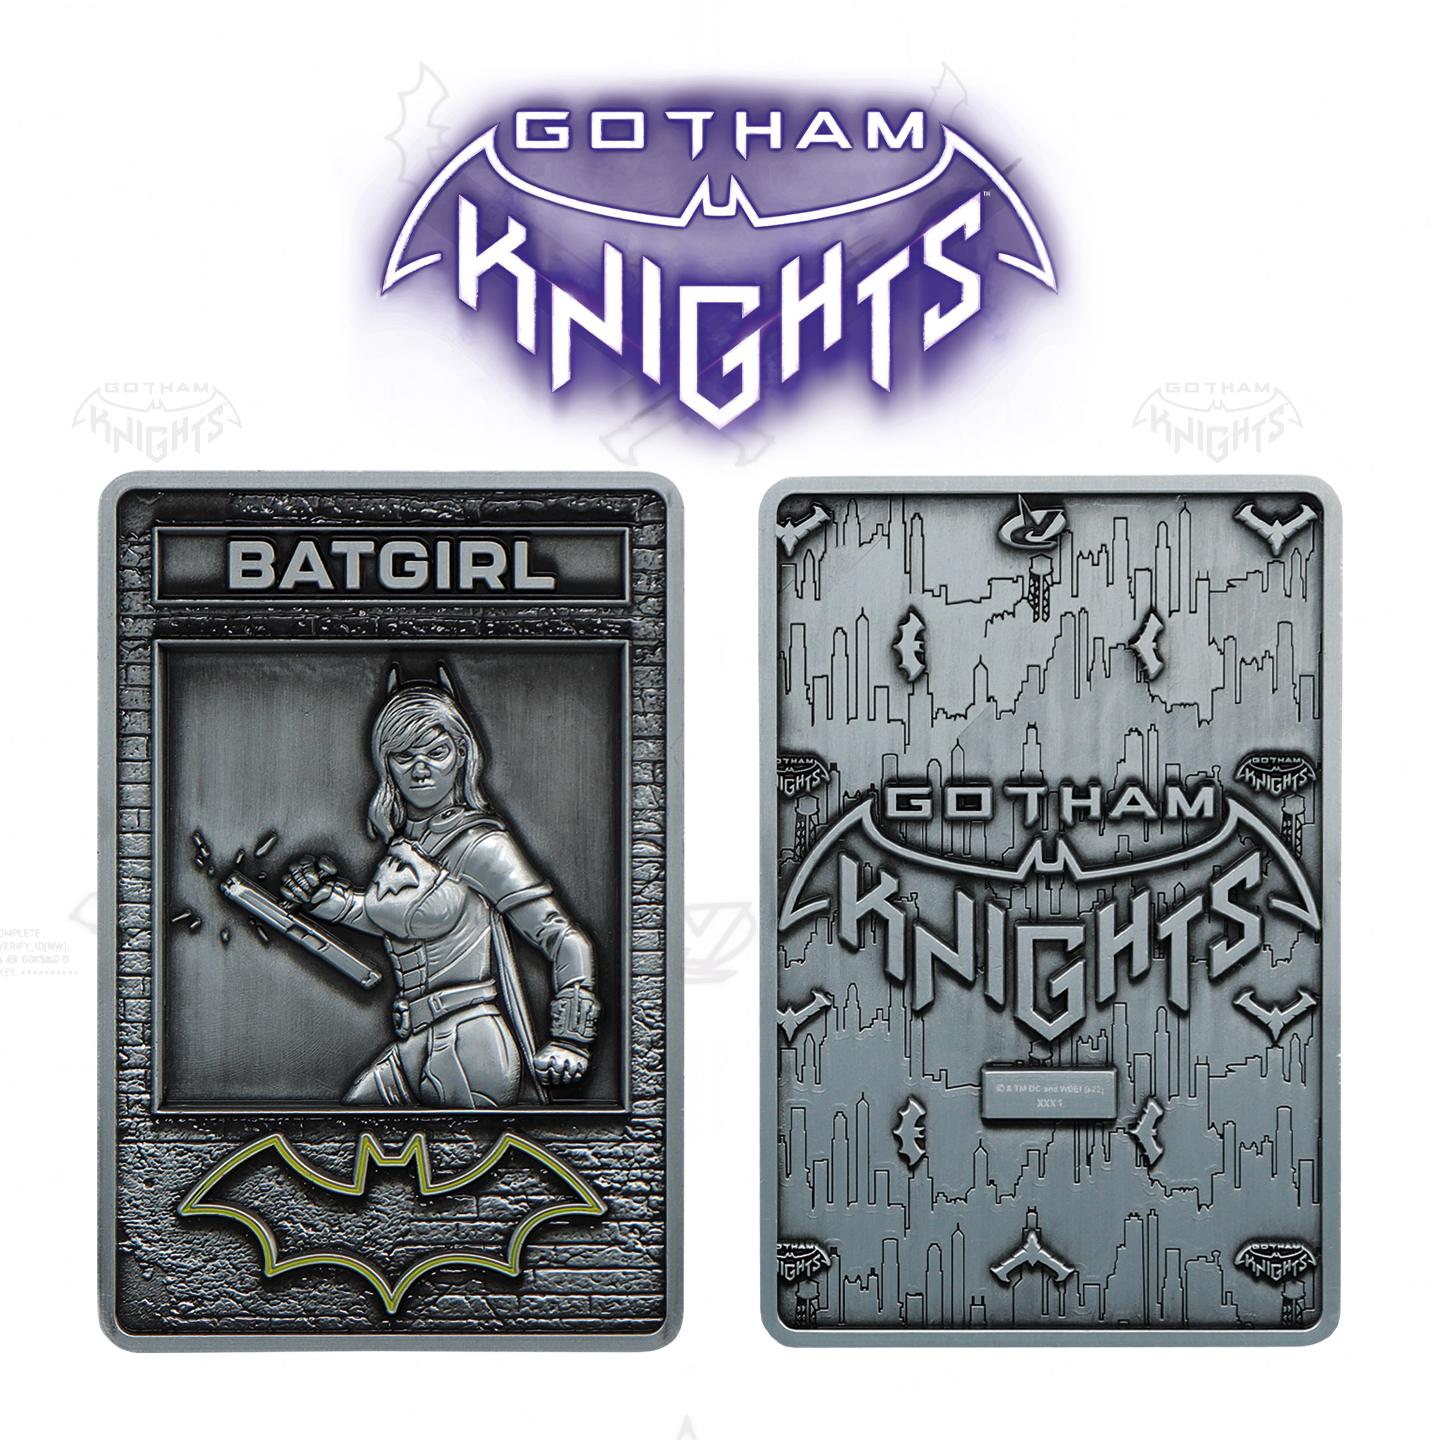 Gotham Knights Limited edition ingot : Batgirl